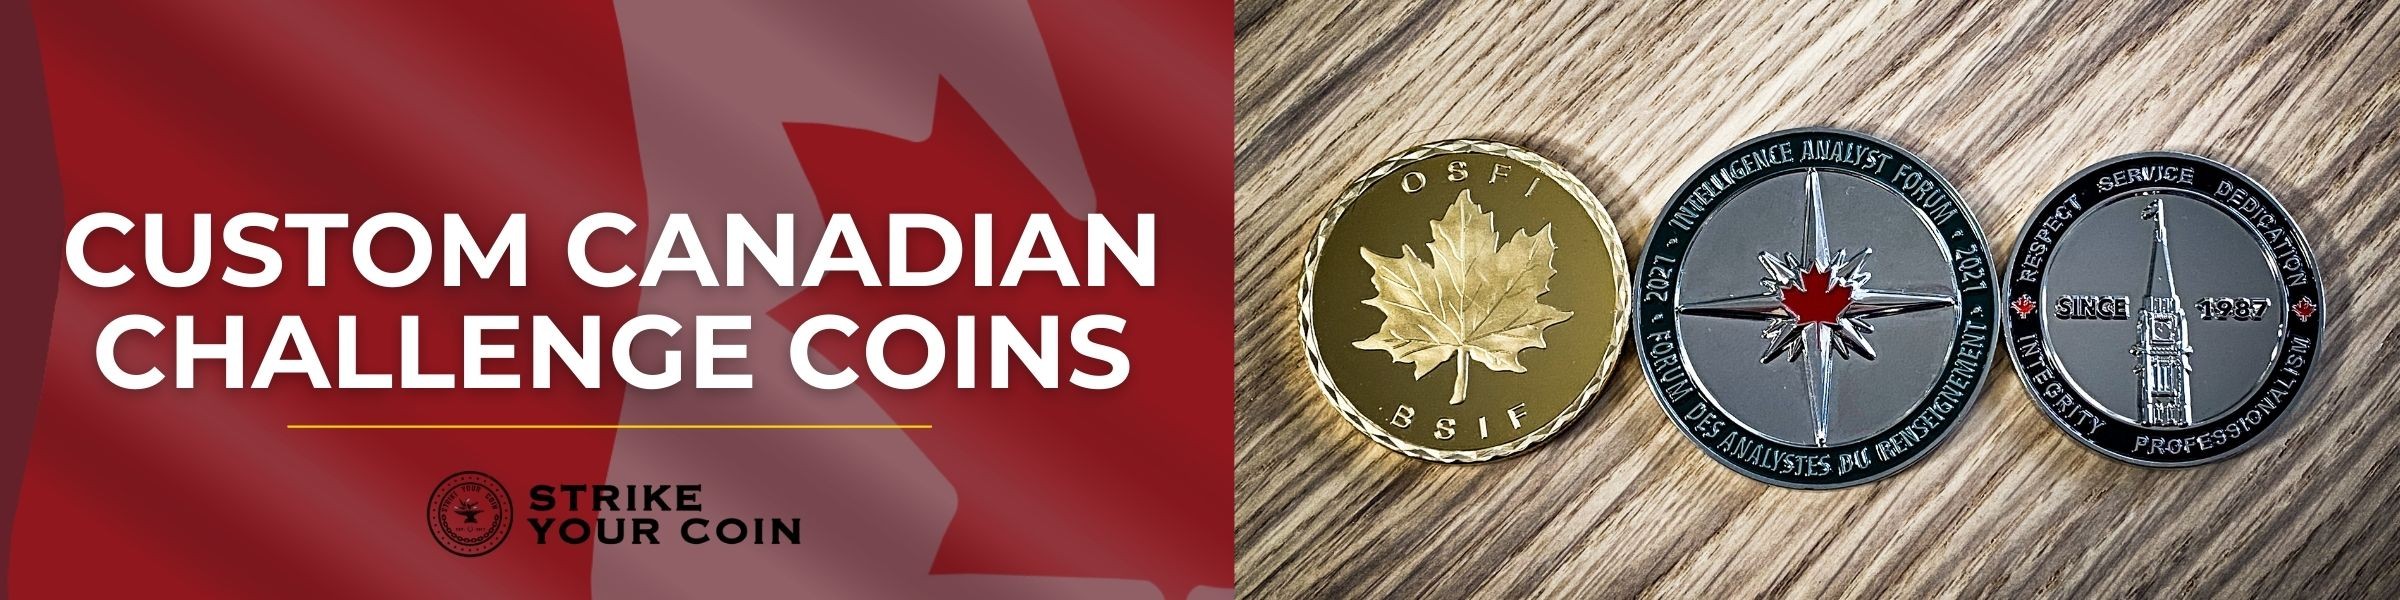 Custom Canadian Challenge Coins Banner